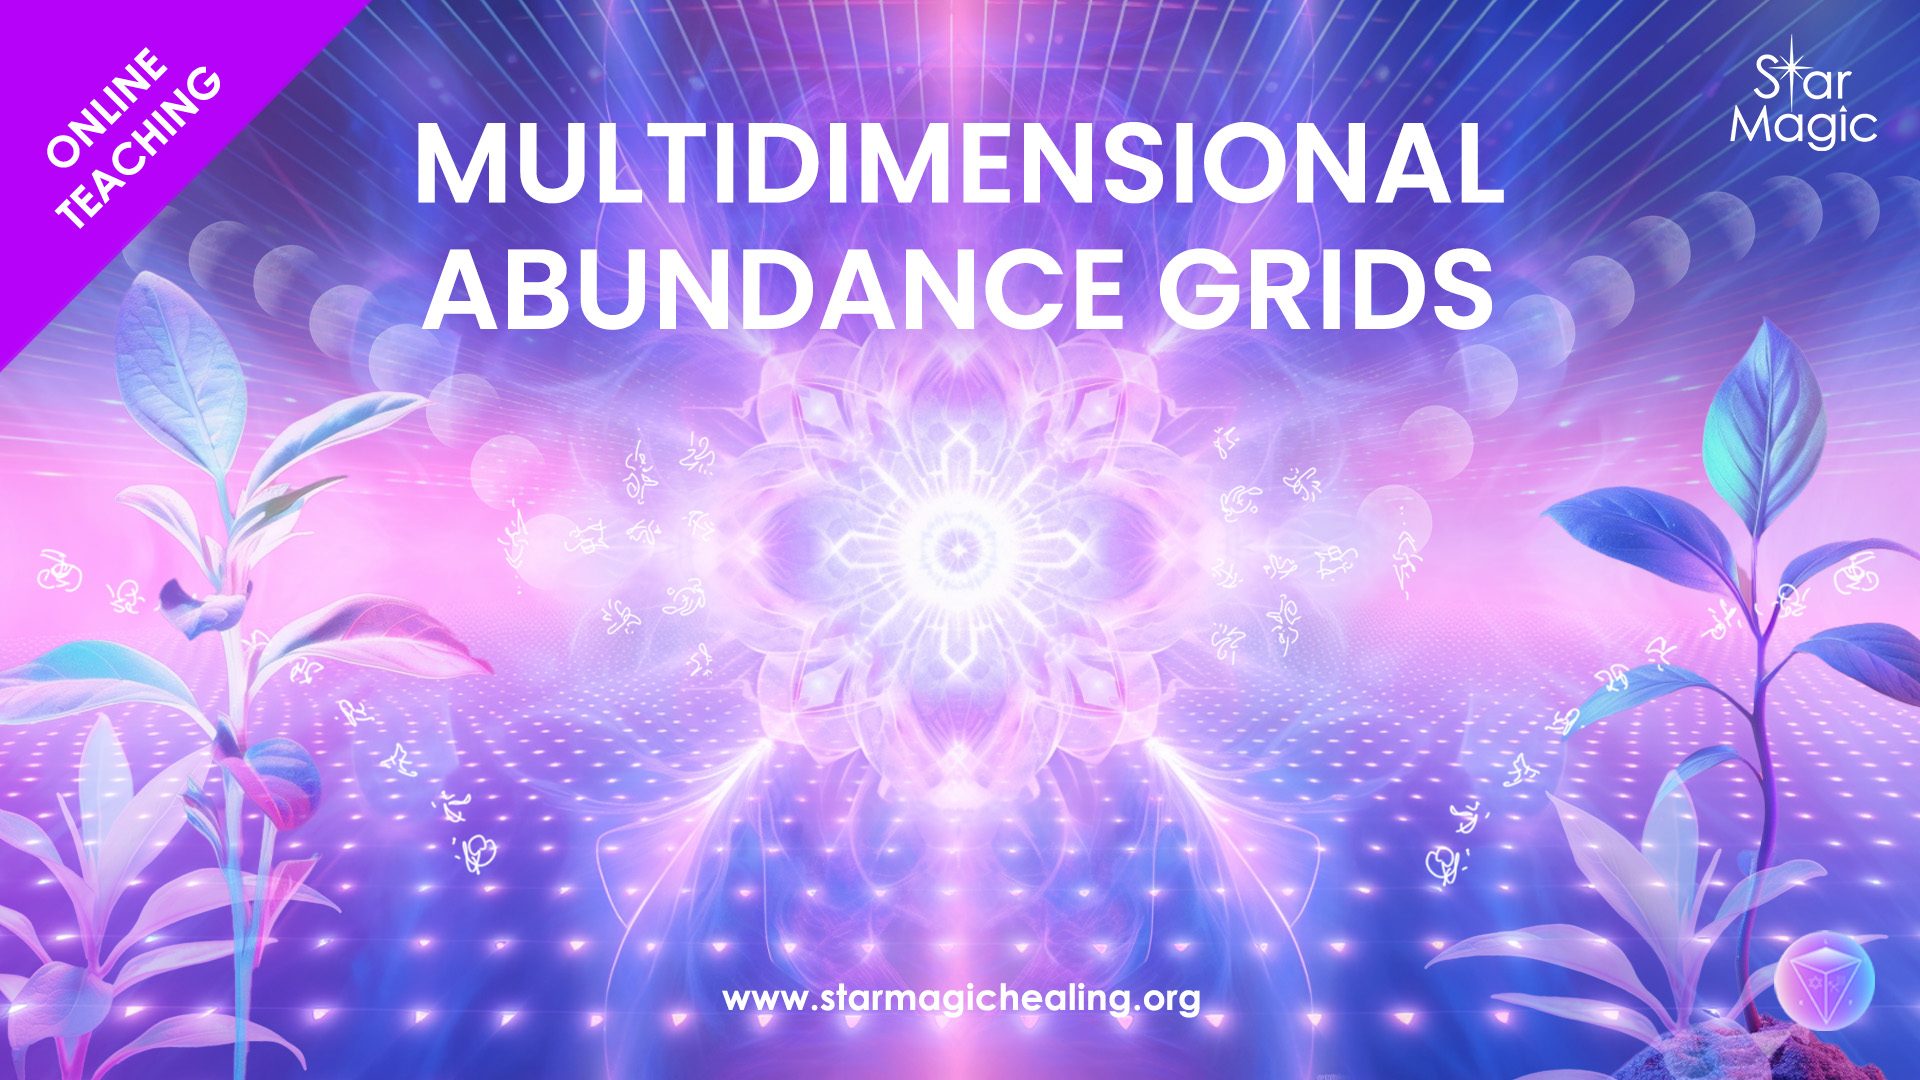 Multidimensional Abundance Grids Workshop